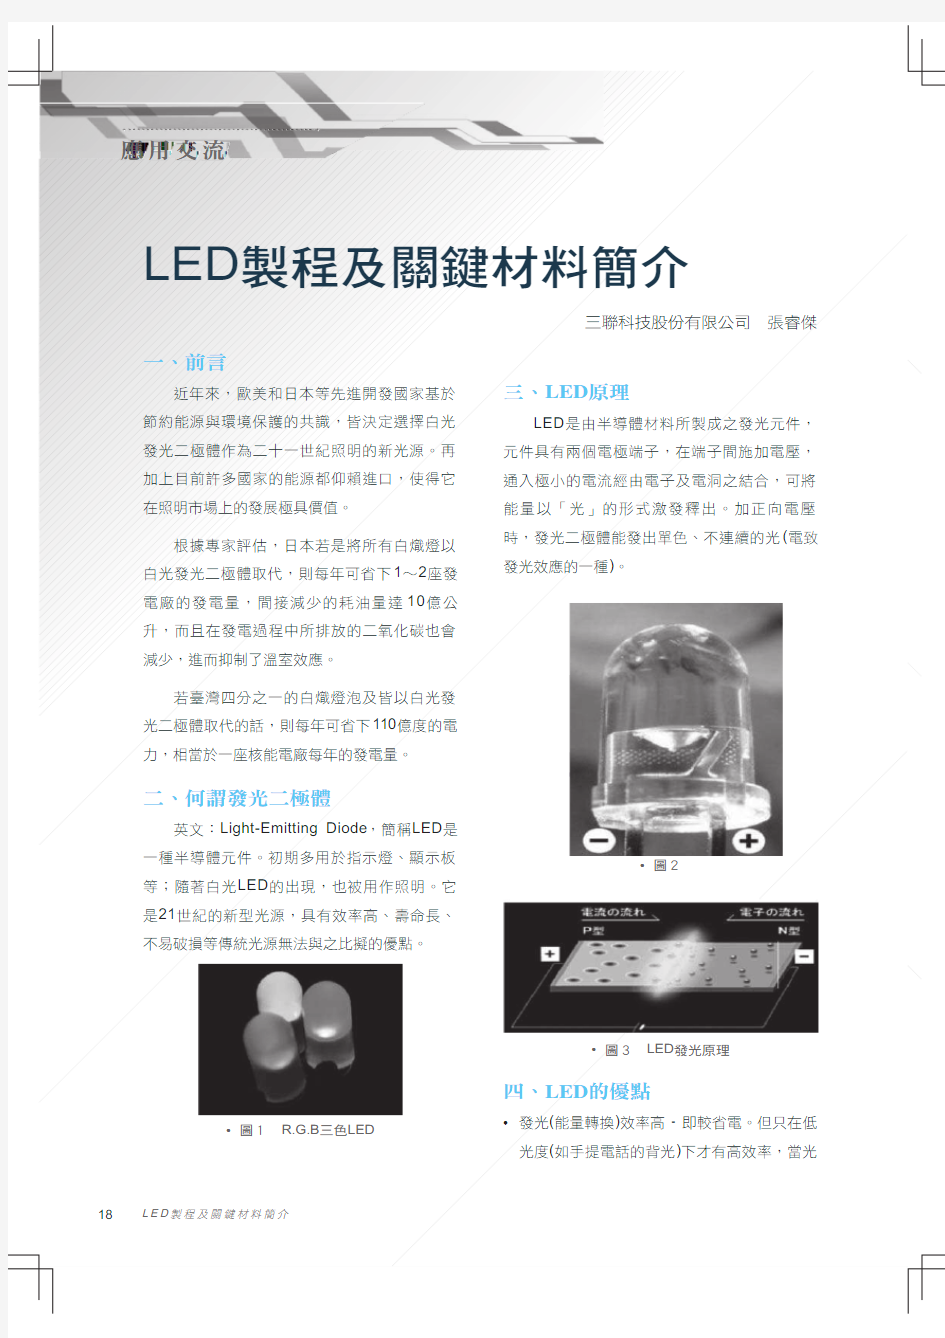 LED制程及关键材料介绍